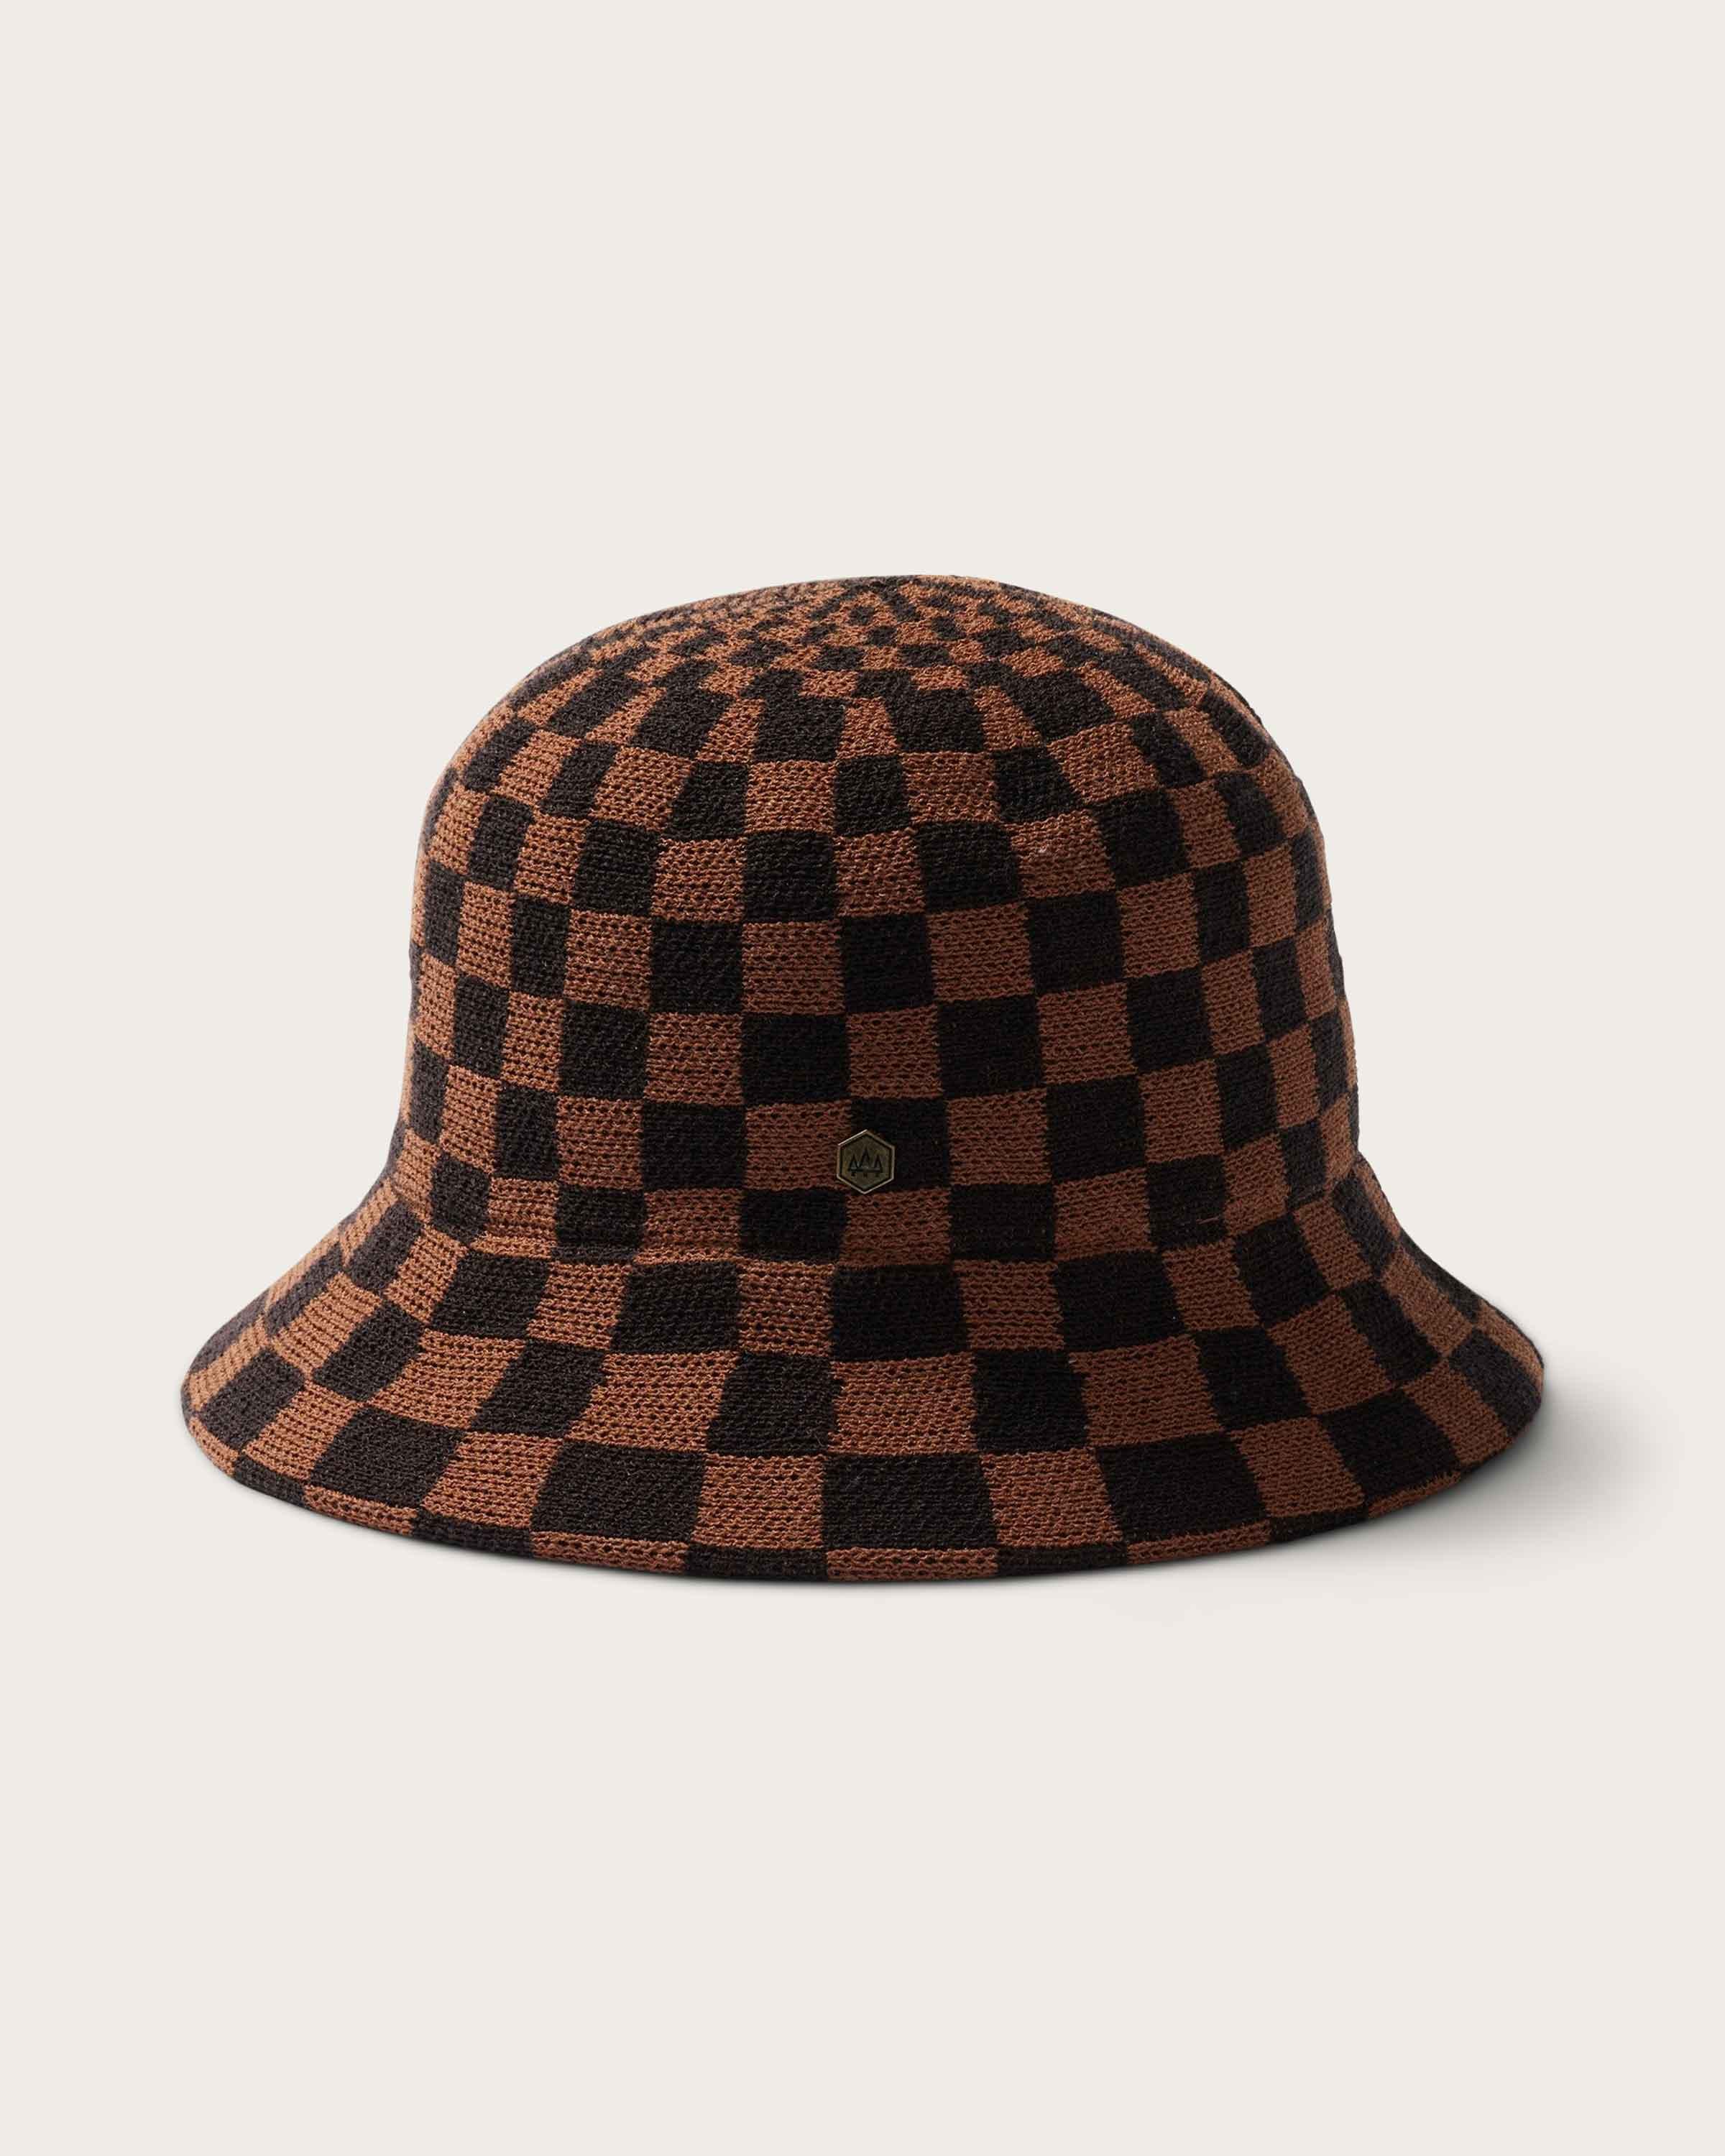 Kennedy Bucket in Brown Check - undefined - Hemlock Hat Co. Buckets